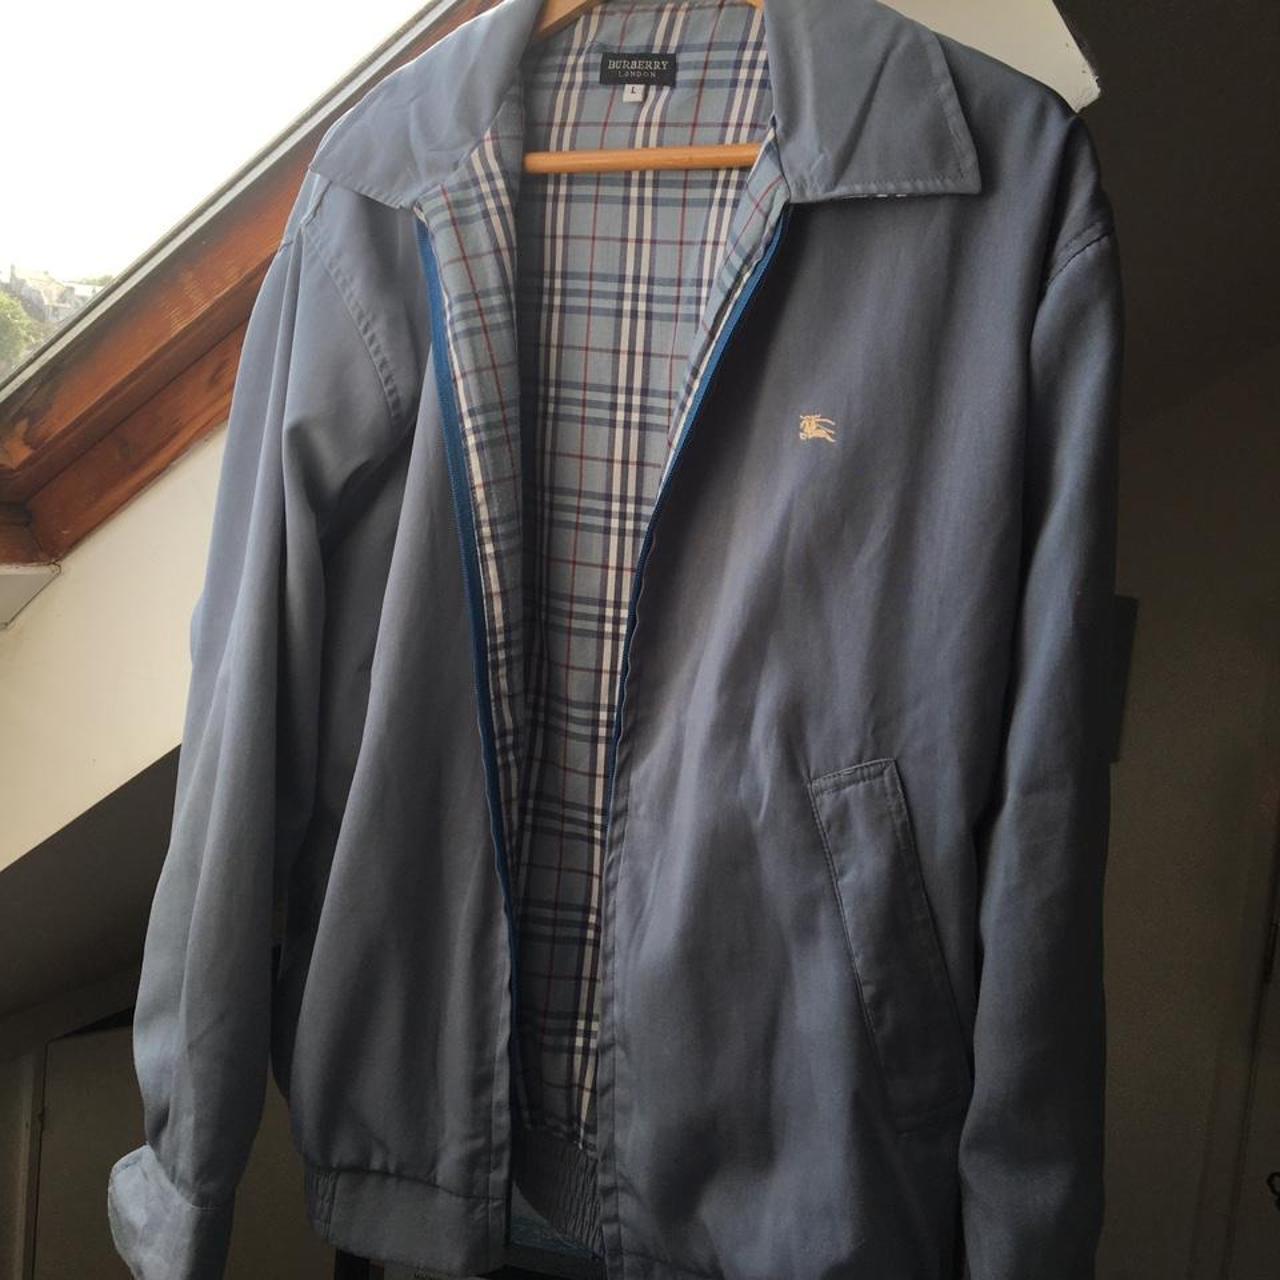 Blue Burberry Harrington jacket with the Burberry... - Depop